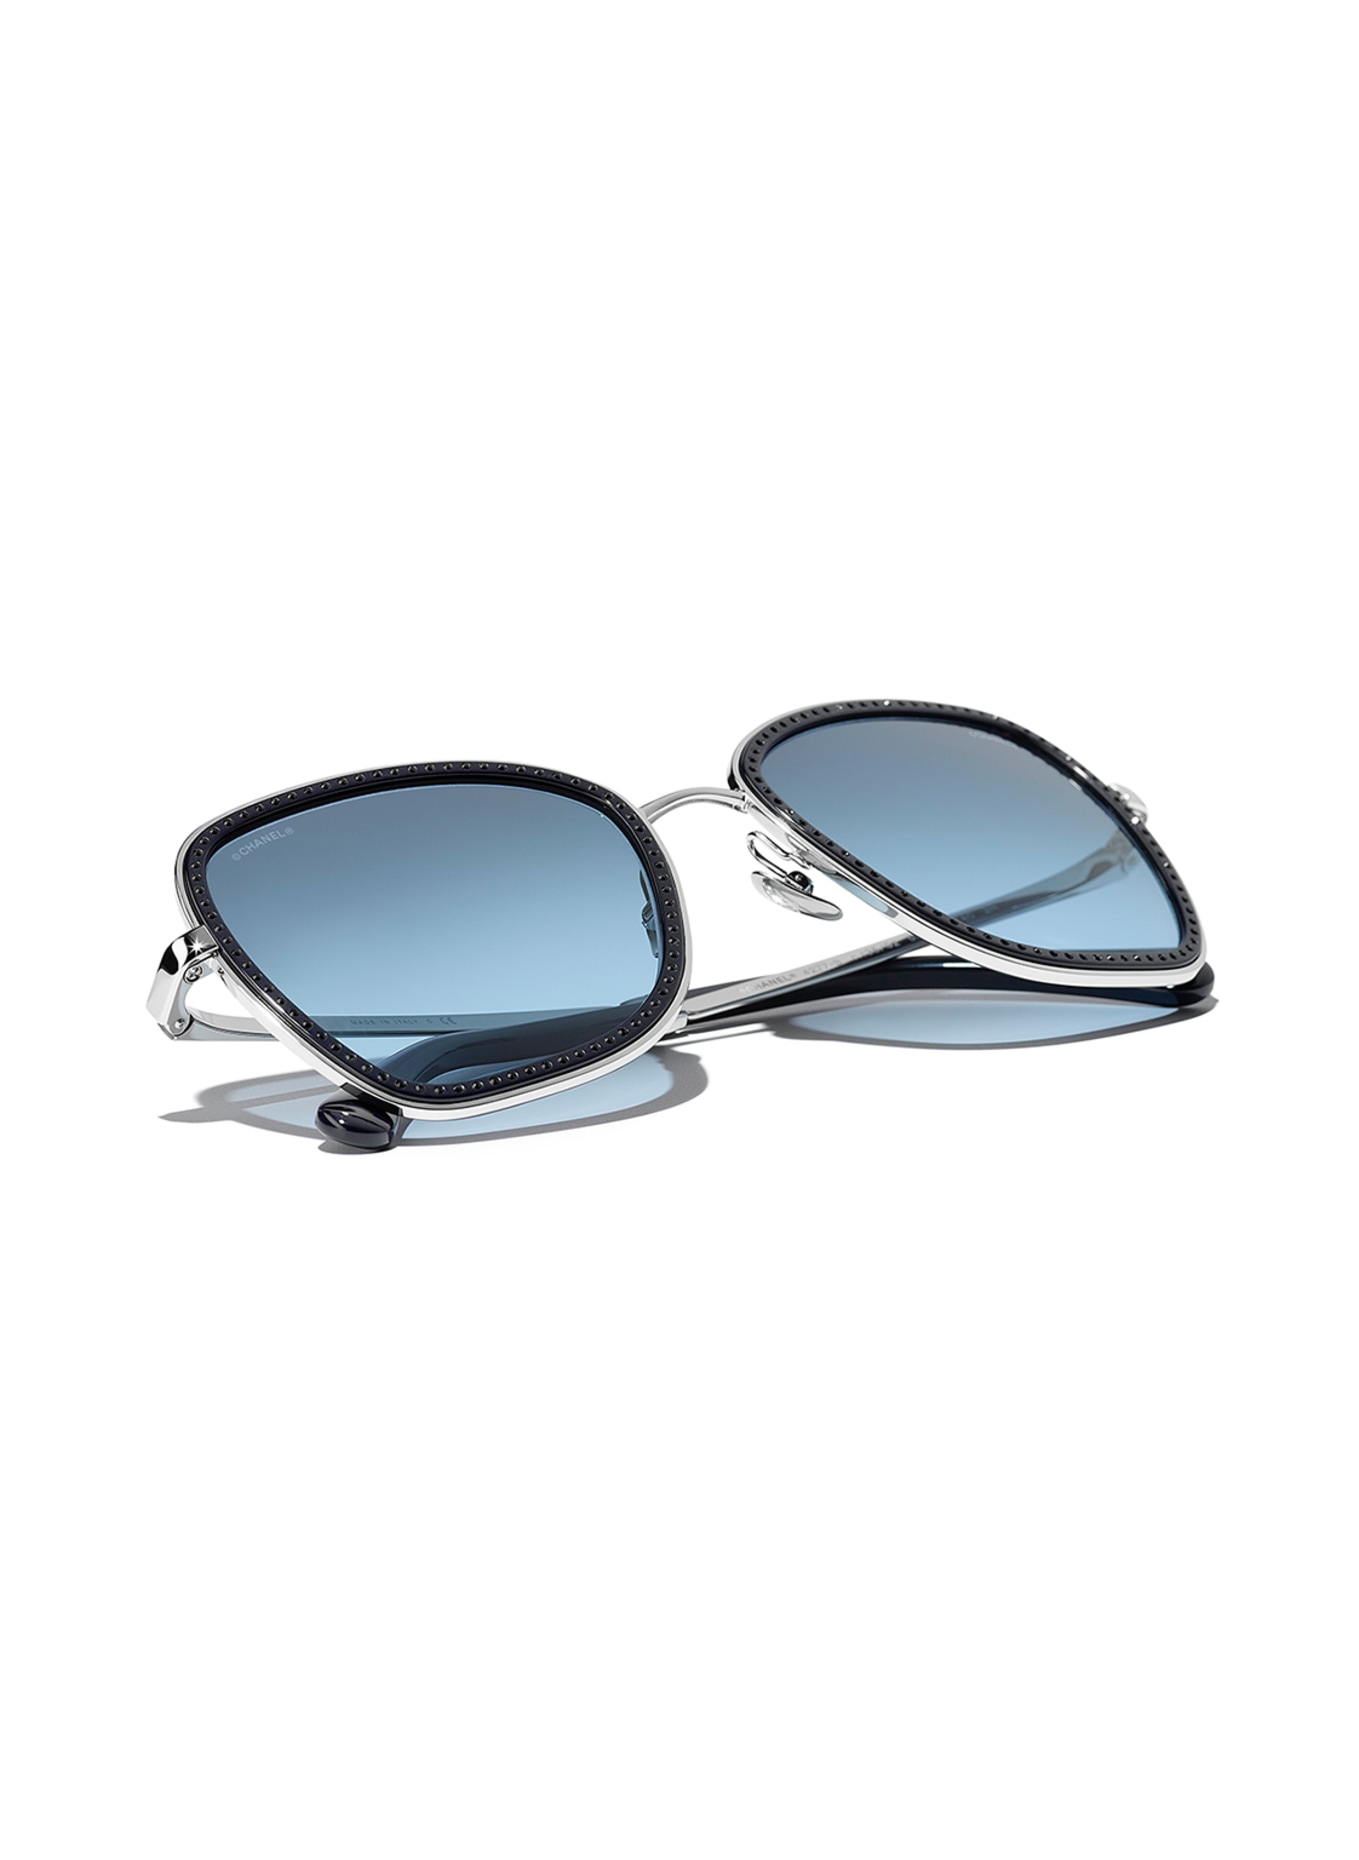 Chanel CC Logo Blue Tinted Sunglasses  purchasegarments